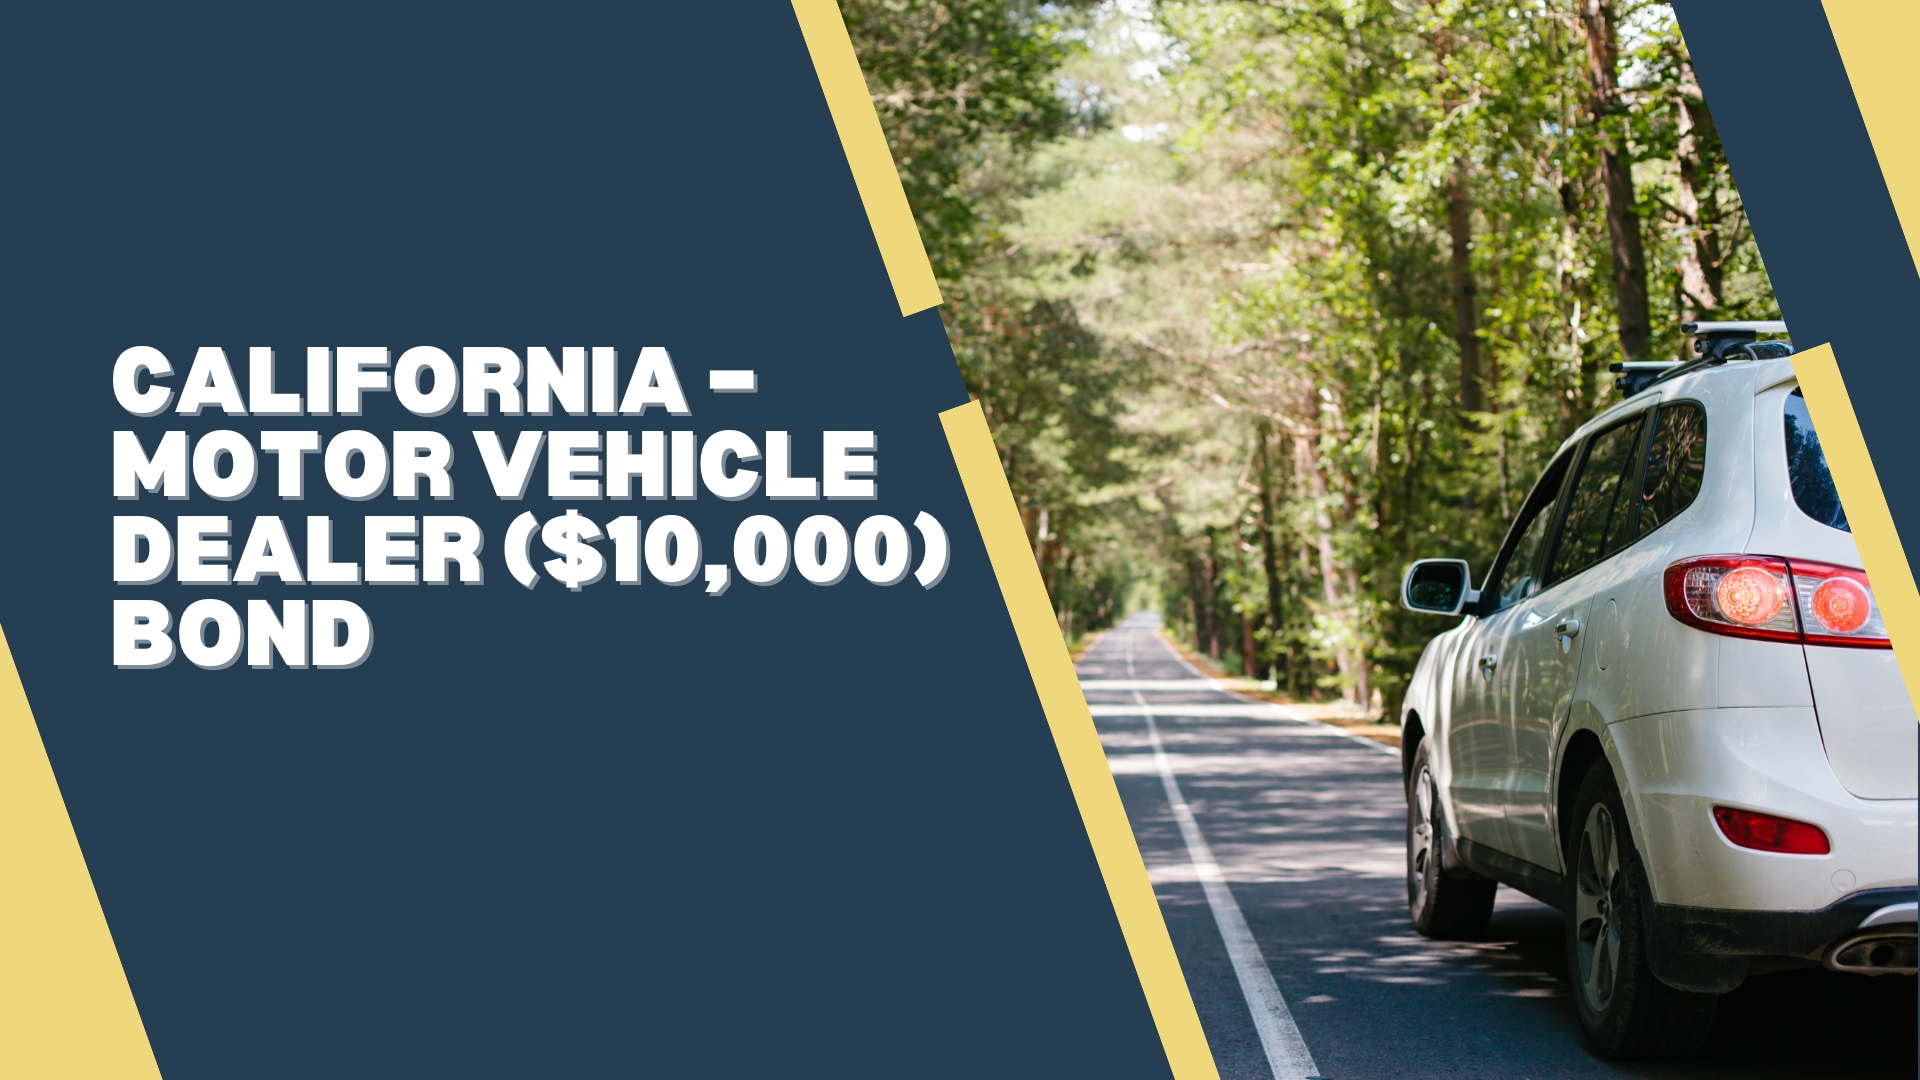 Surety Bond-California – Motor Vehicle Dealer ($10,000) Bond